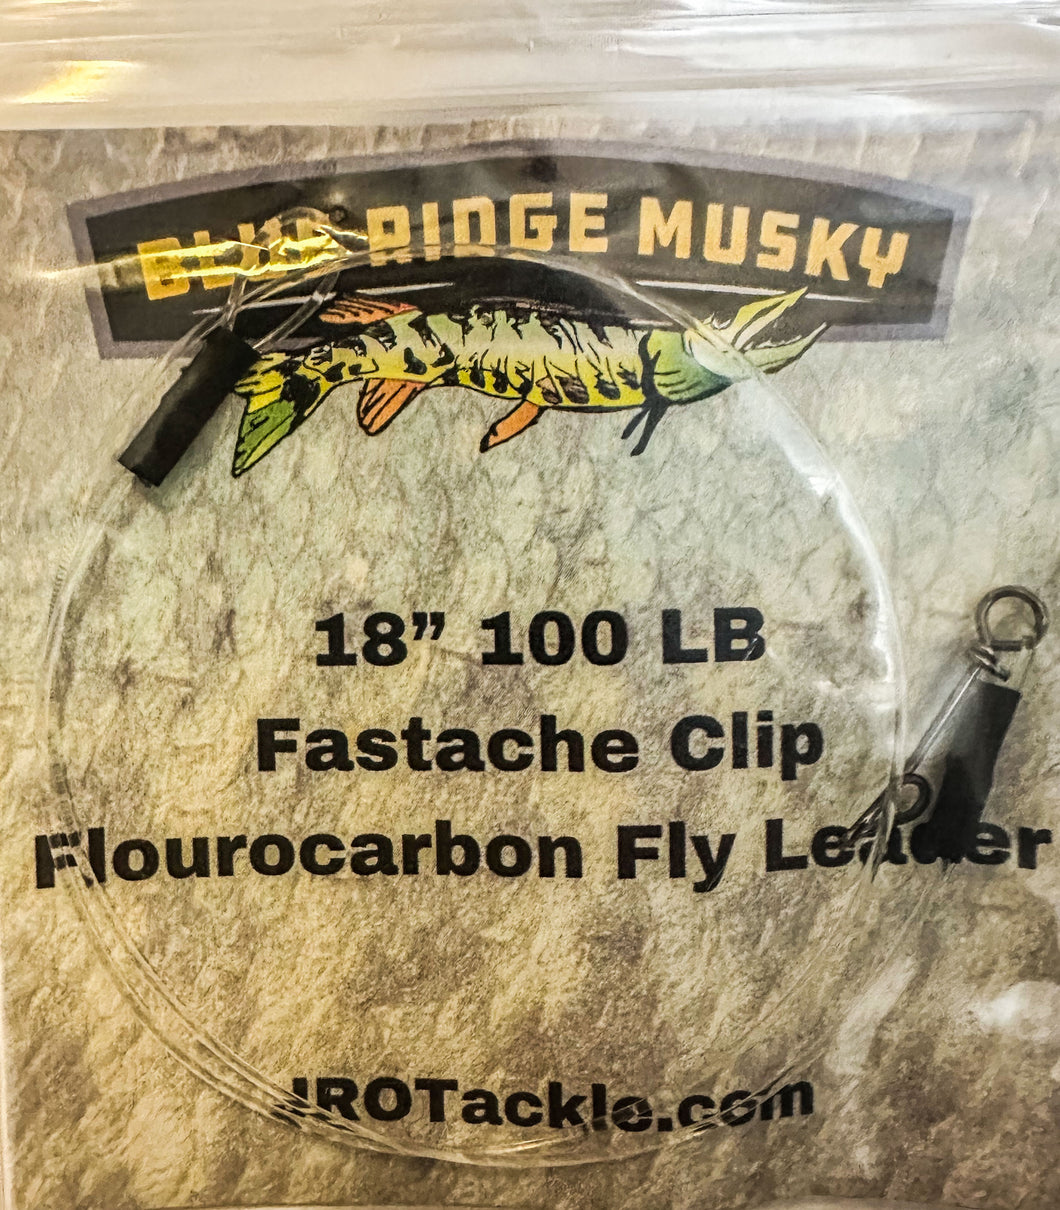 Blue Ridge Musky Fly Leader - 18” 100lb Flouro - Fastache